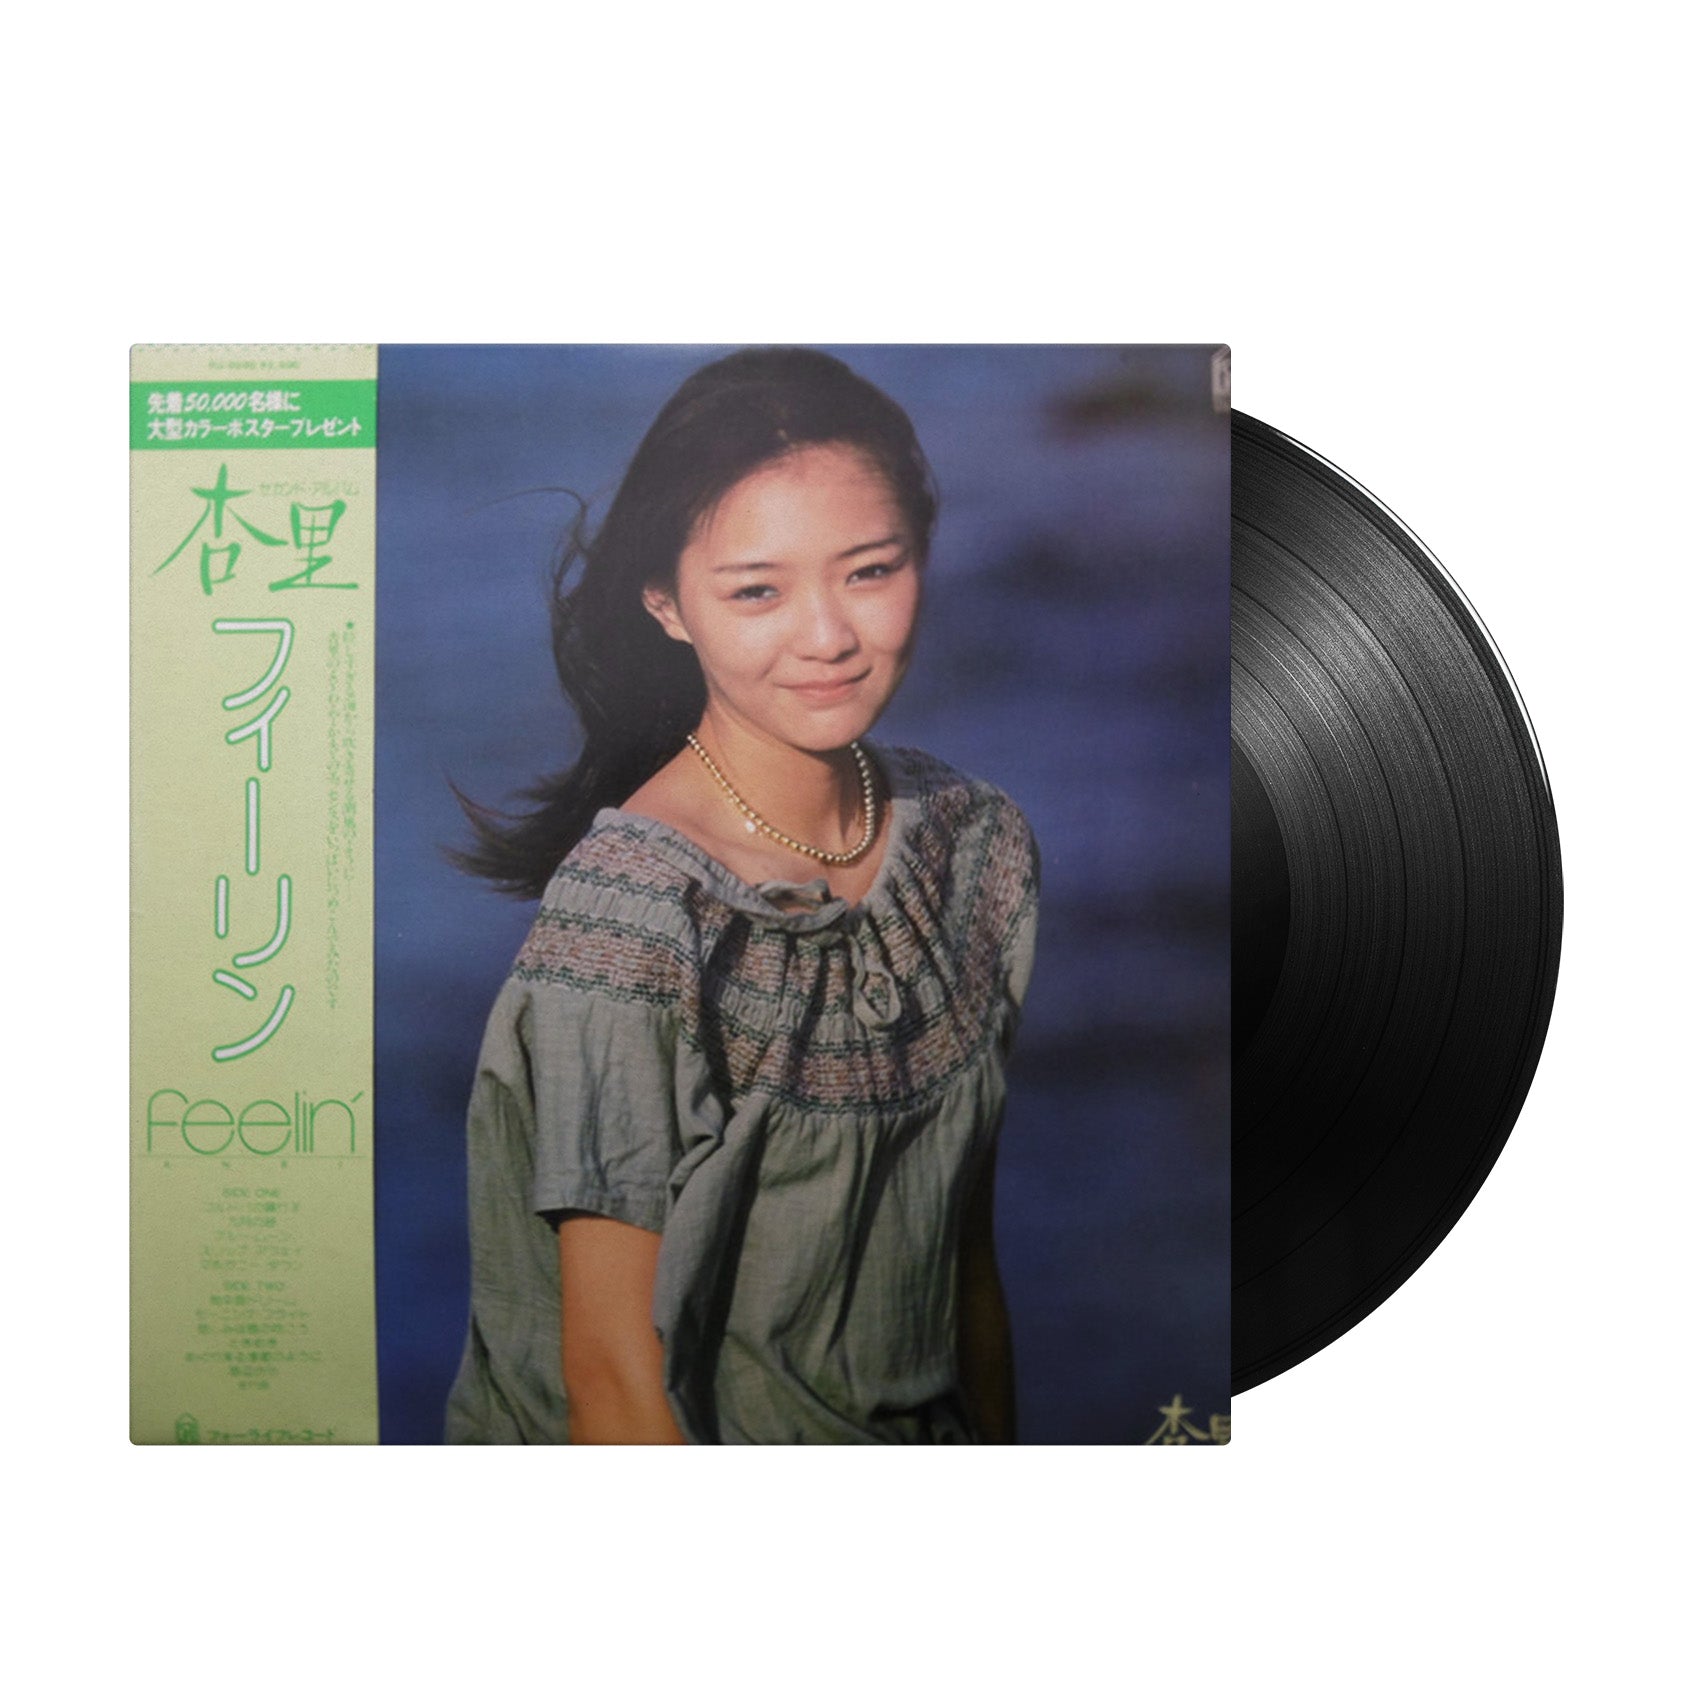 Anri - Feelin' (Japan Import) - Inner Ocean Records